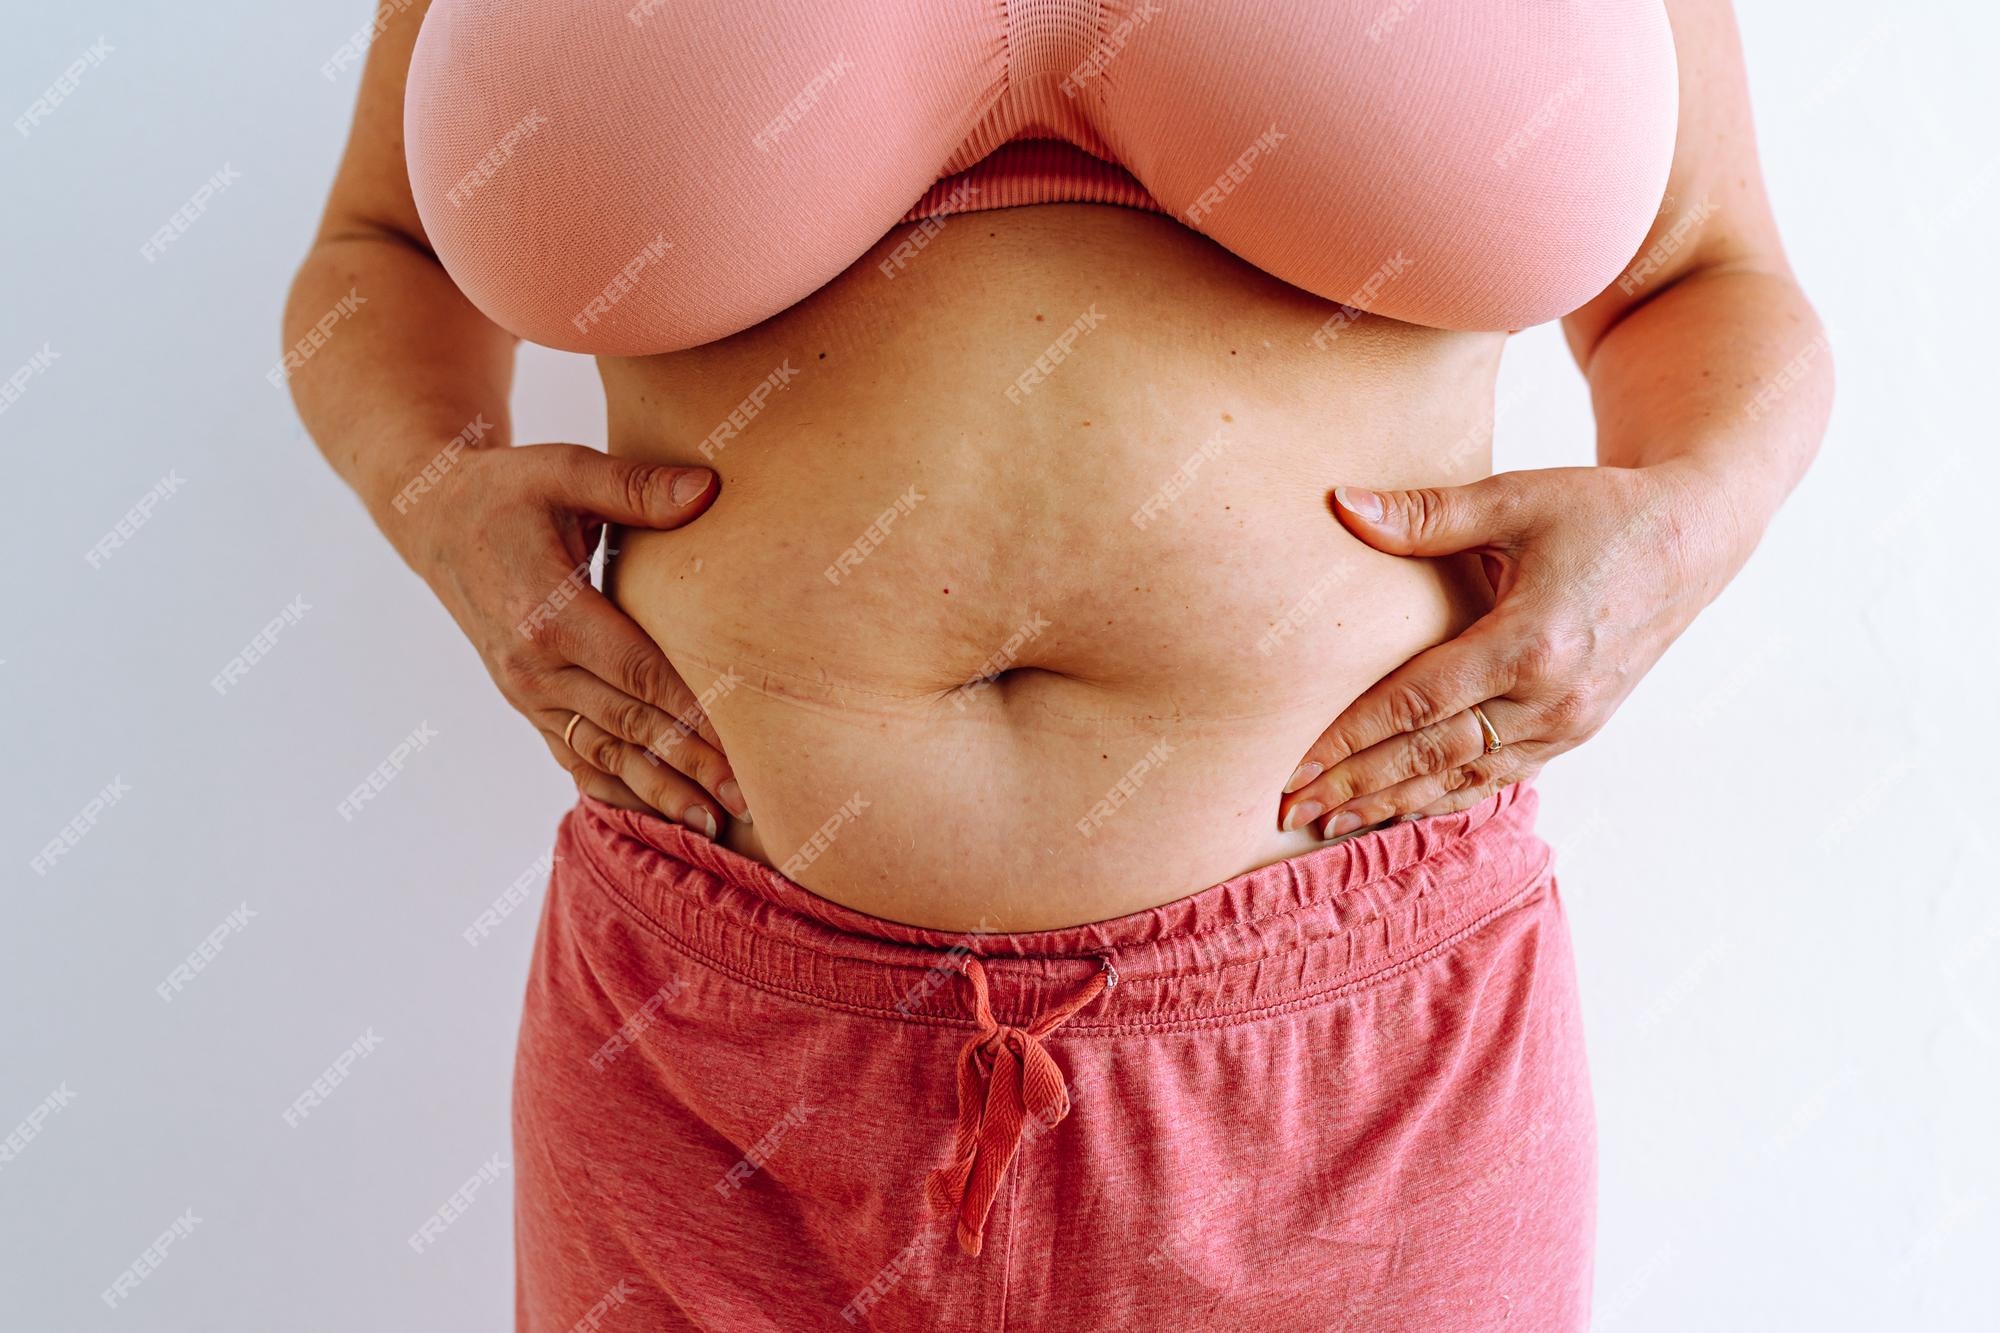 Big Belly Big Tits keener fakes